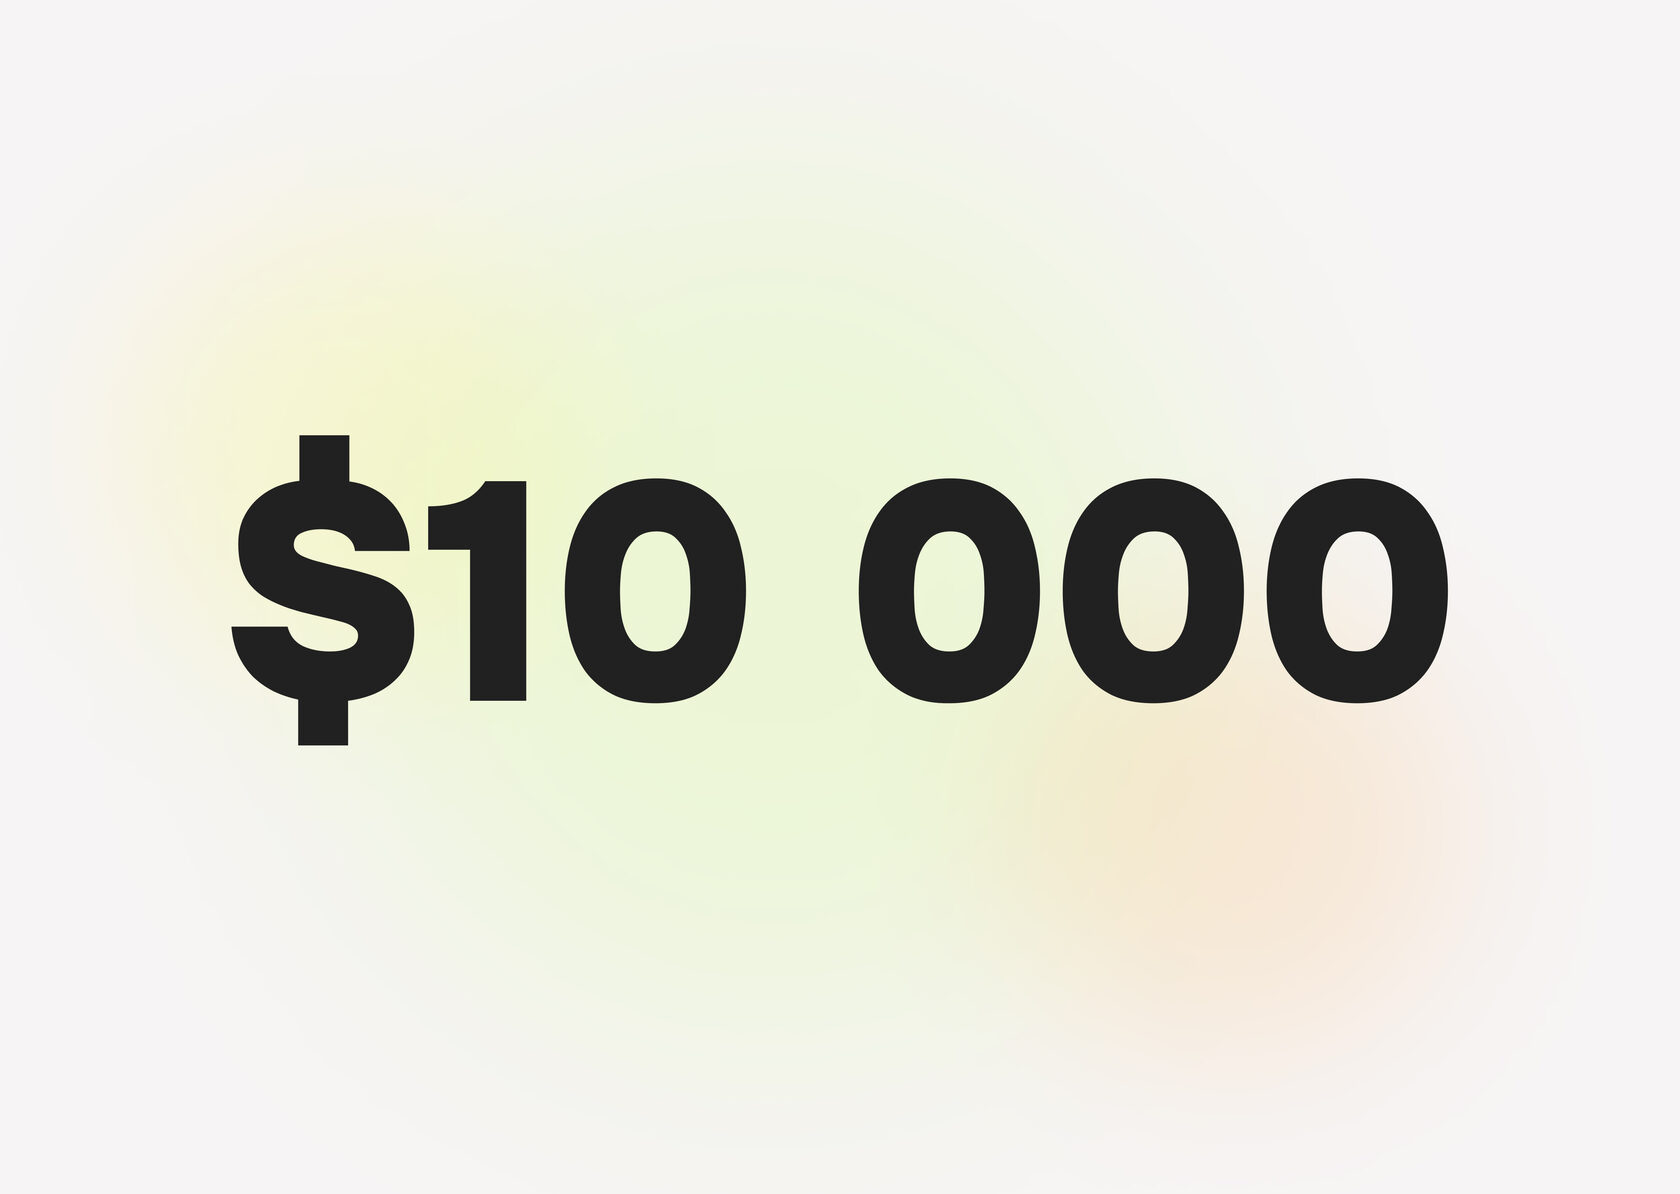 The $10,000 reward